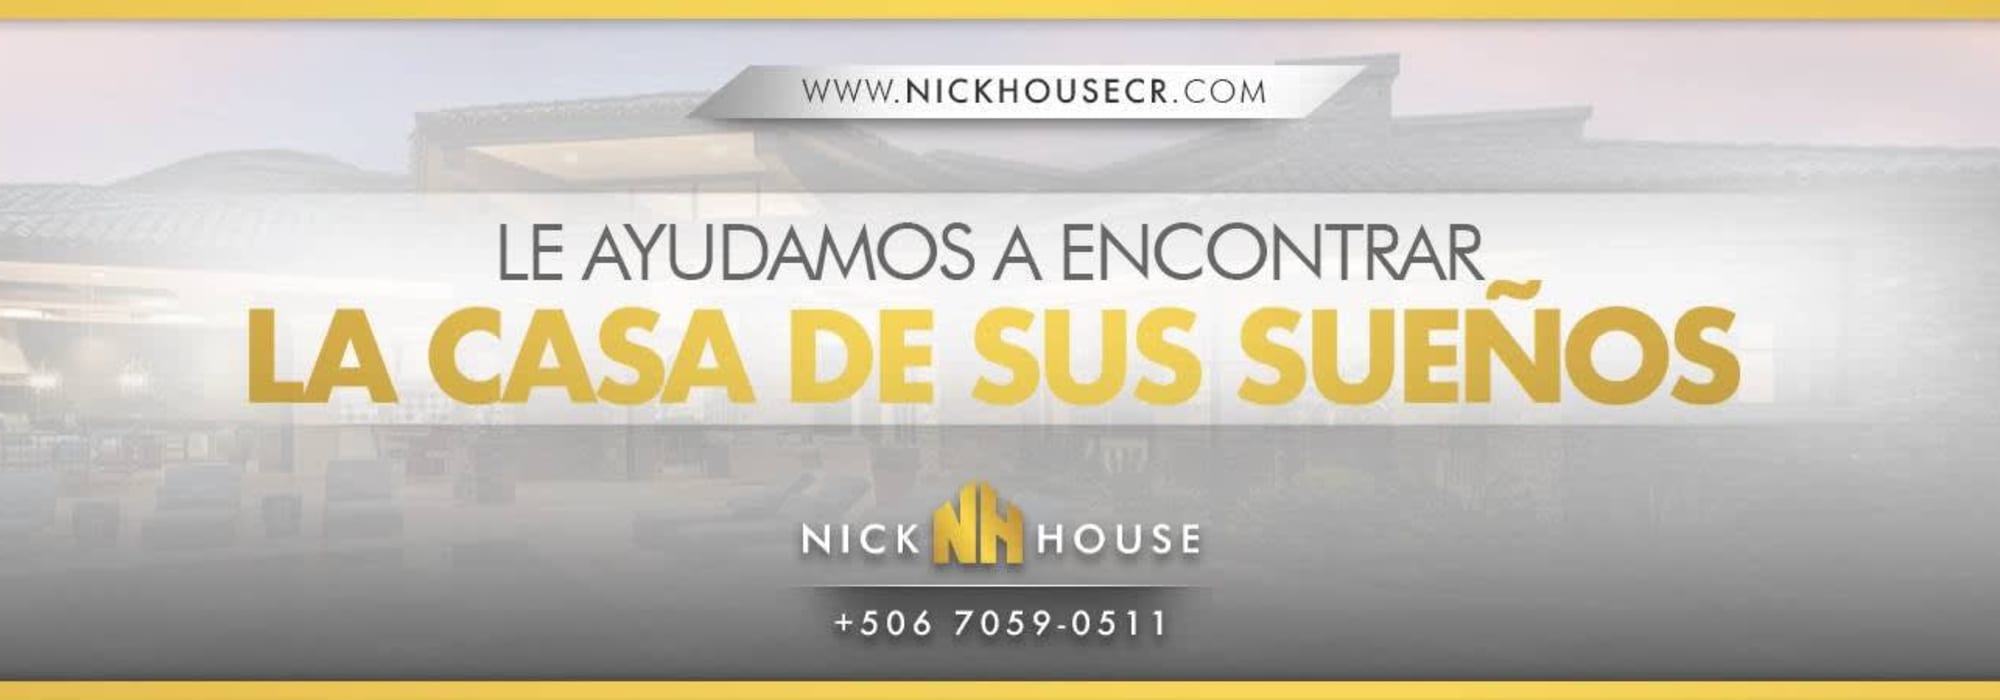 Nick House CR